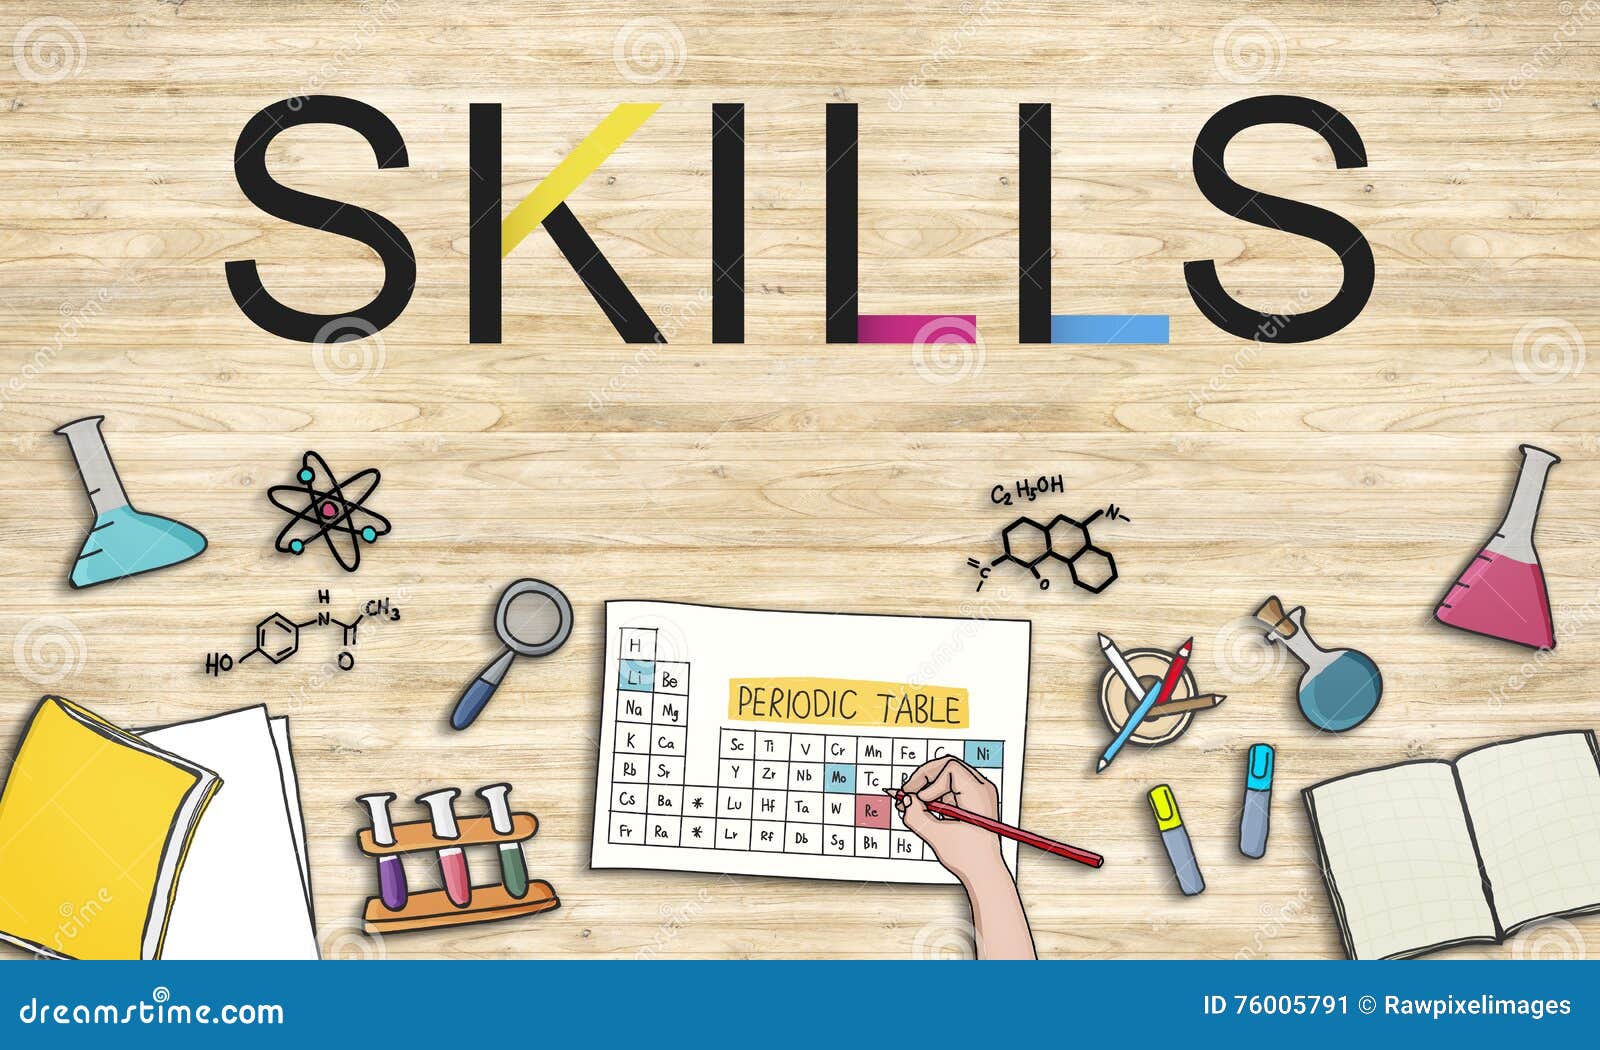 skills-job-profession-expertness-aptitude-concept-stock-illustration-illustration-of-periodic